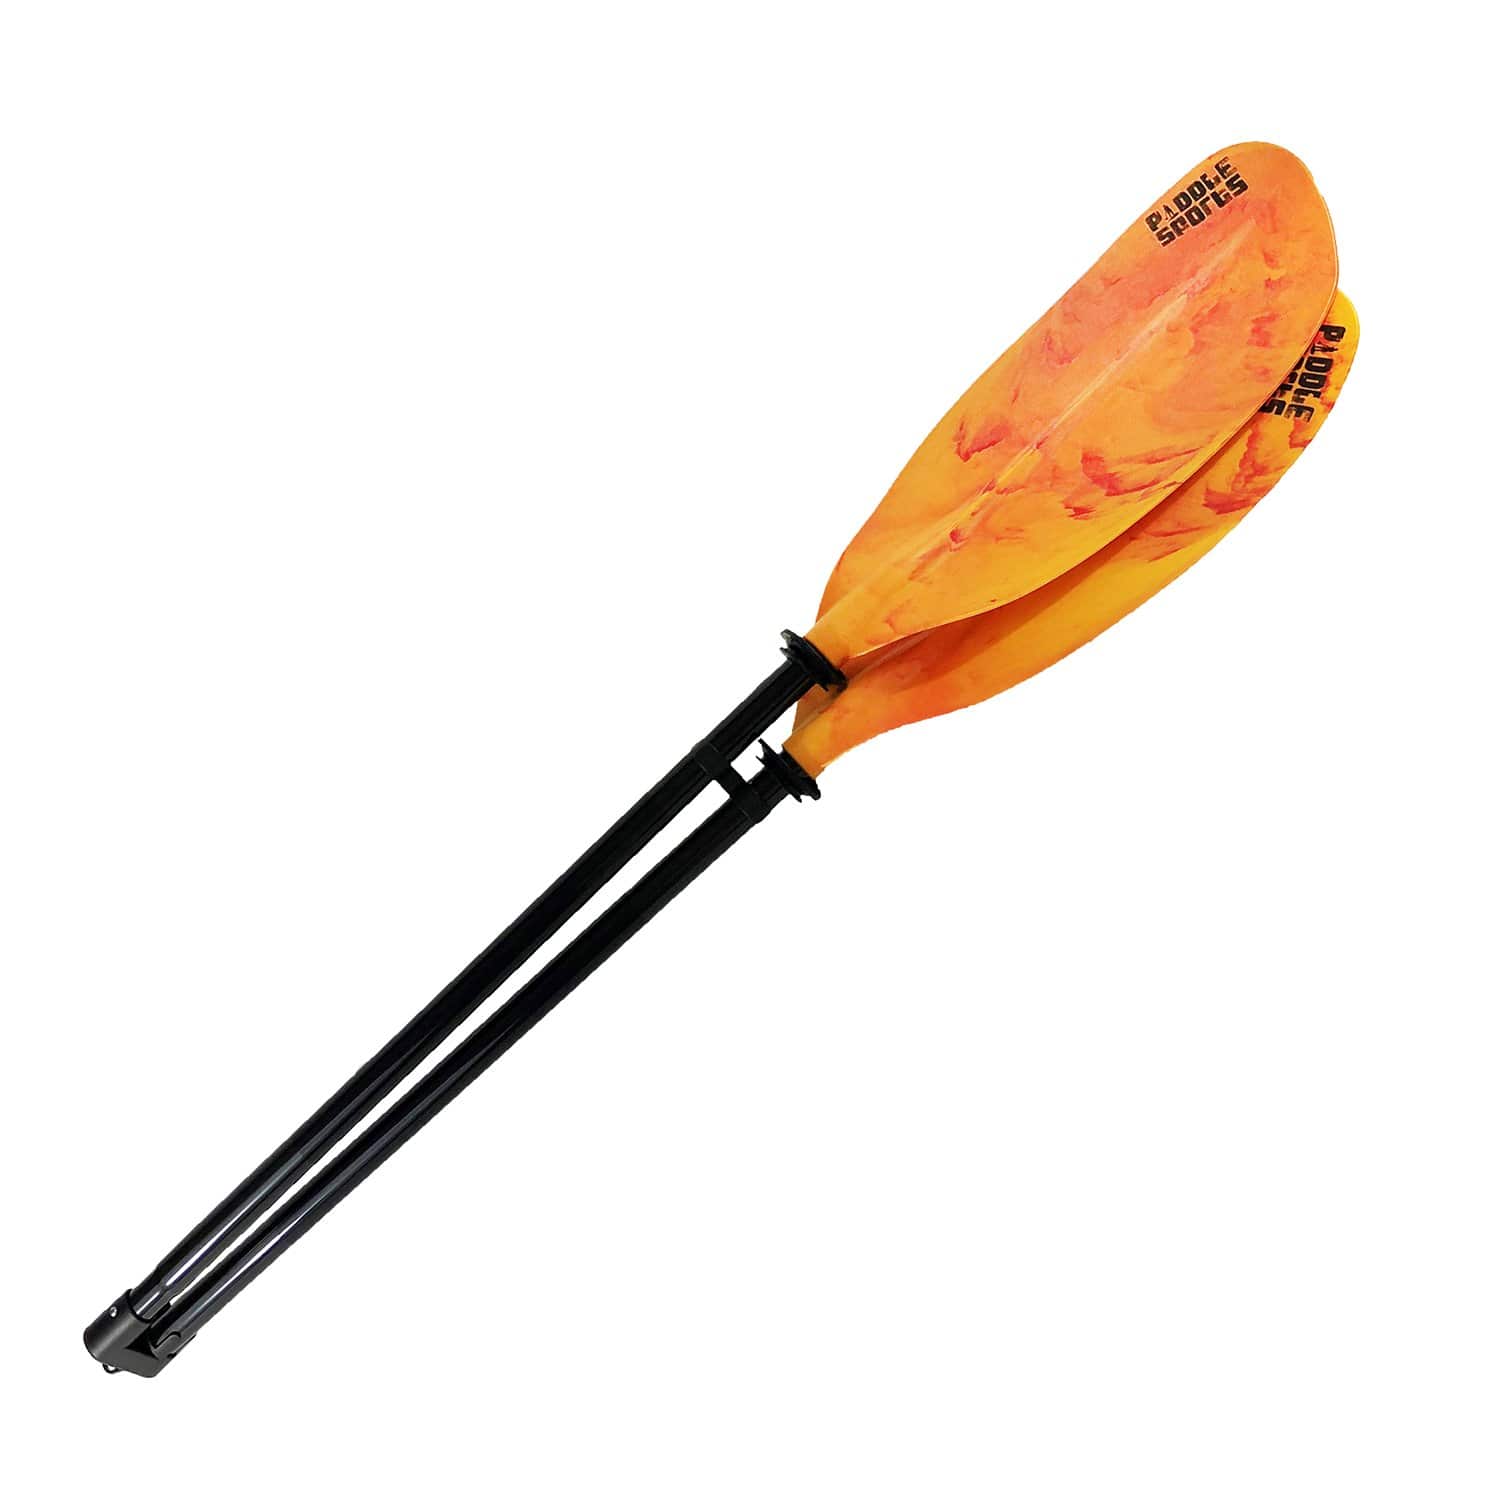 Attwood 11756-2 Kayak Paddle, Asymmetrical